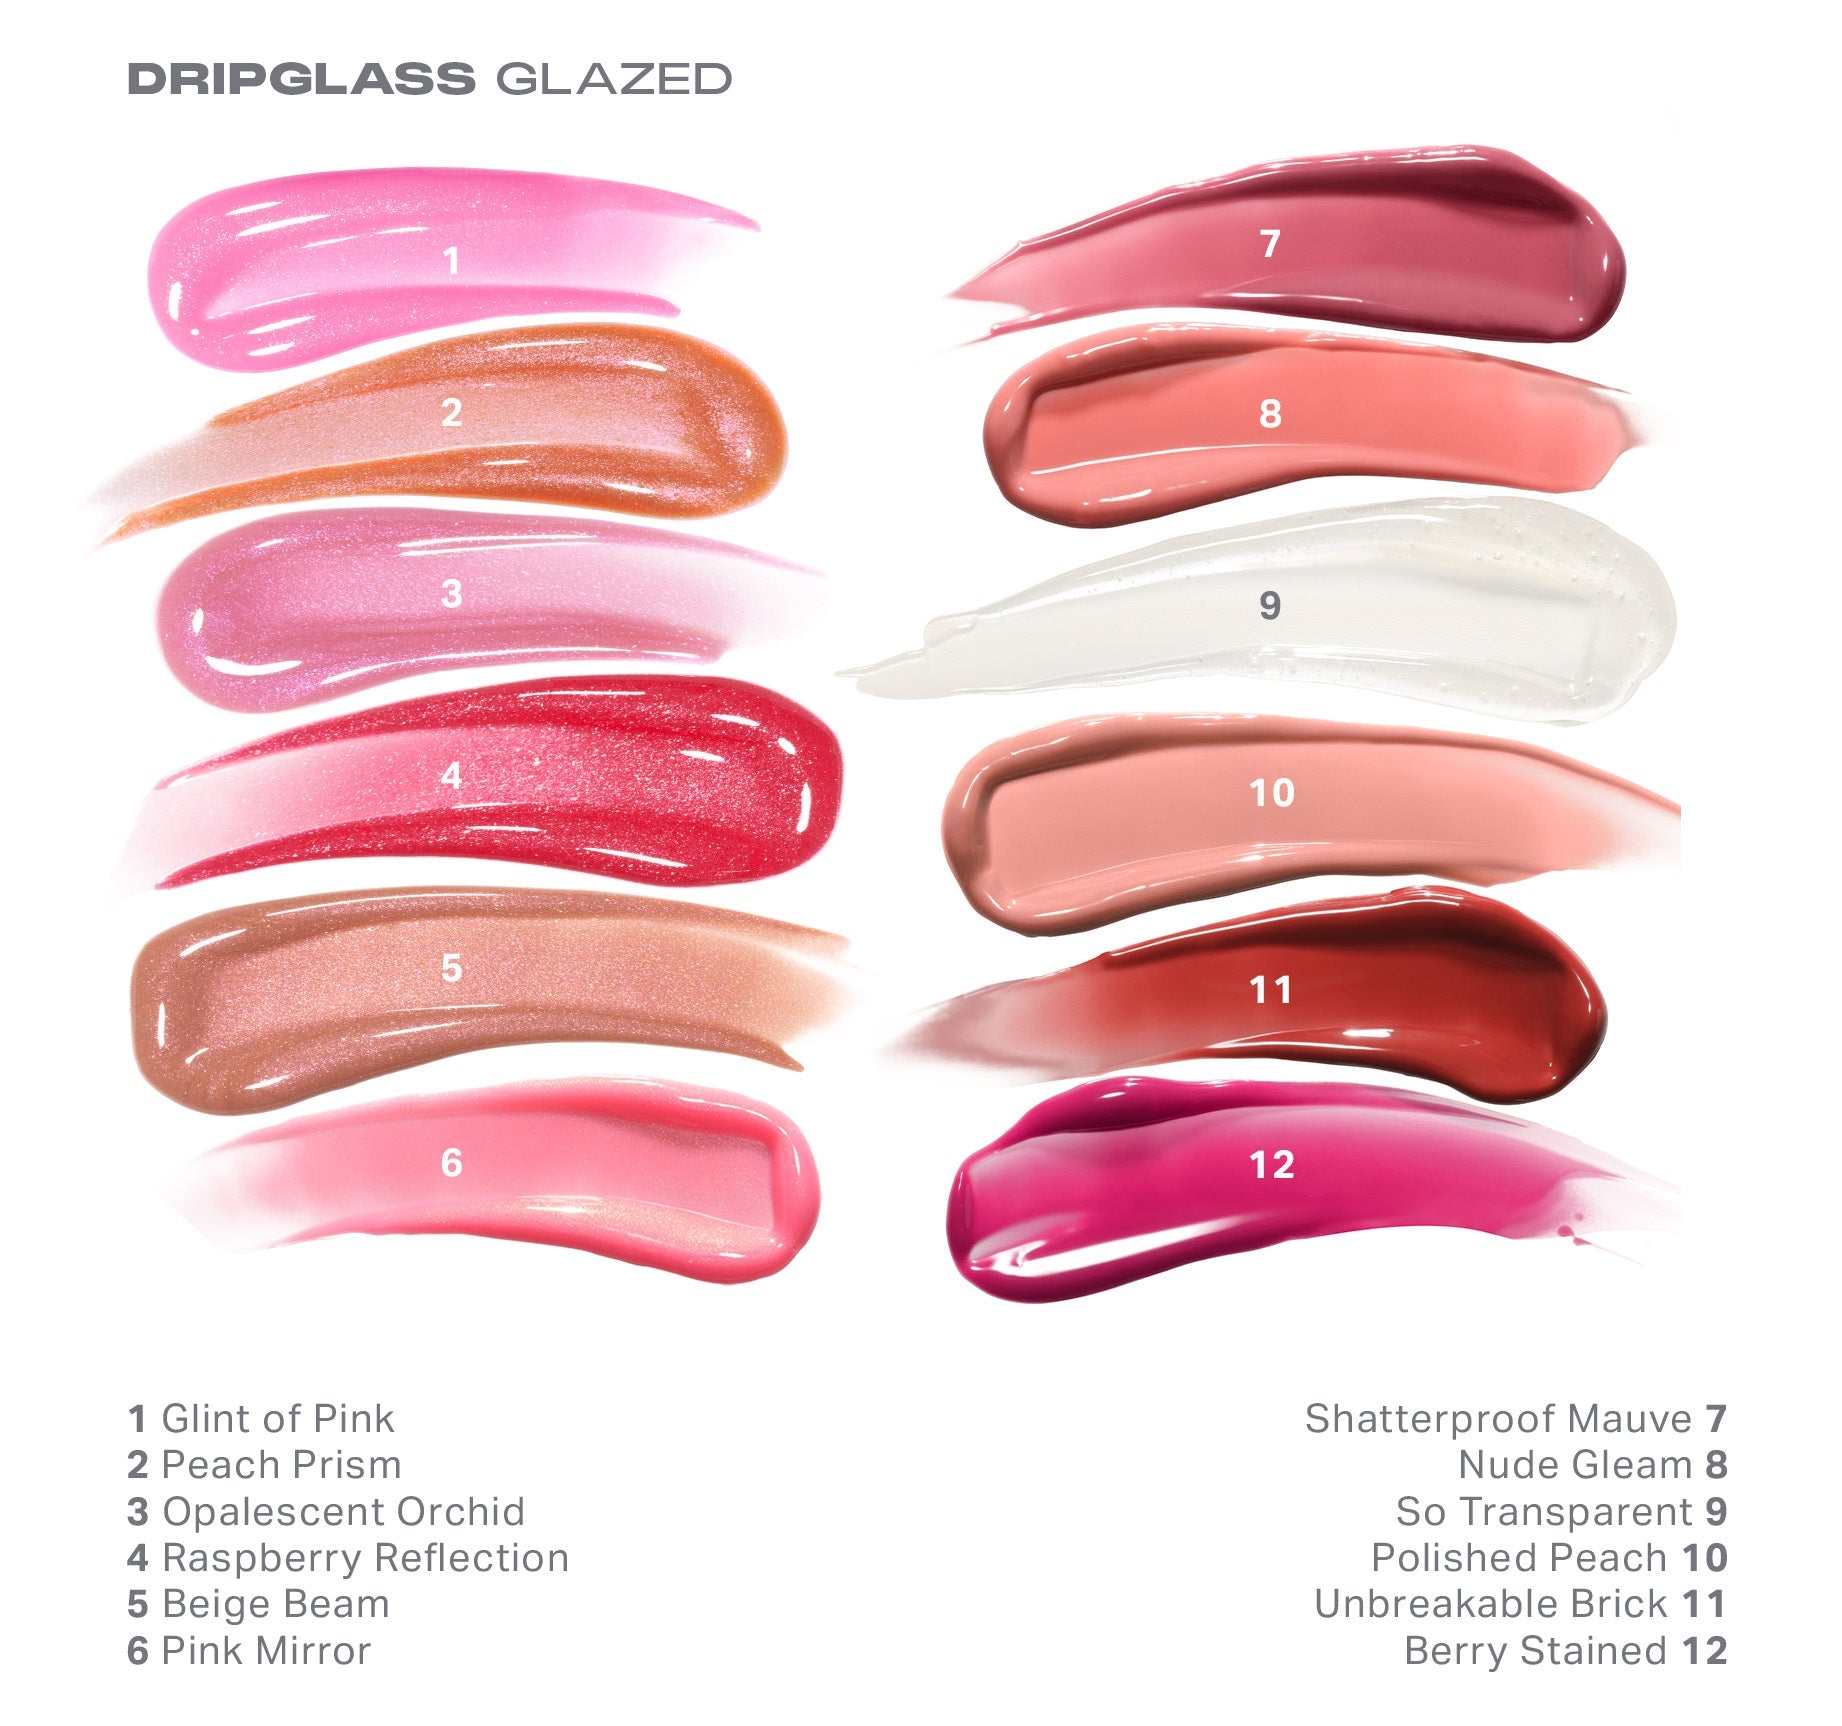 Dripglass Glazed High Shine Lip Gloss - Peach Prism - Image 4